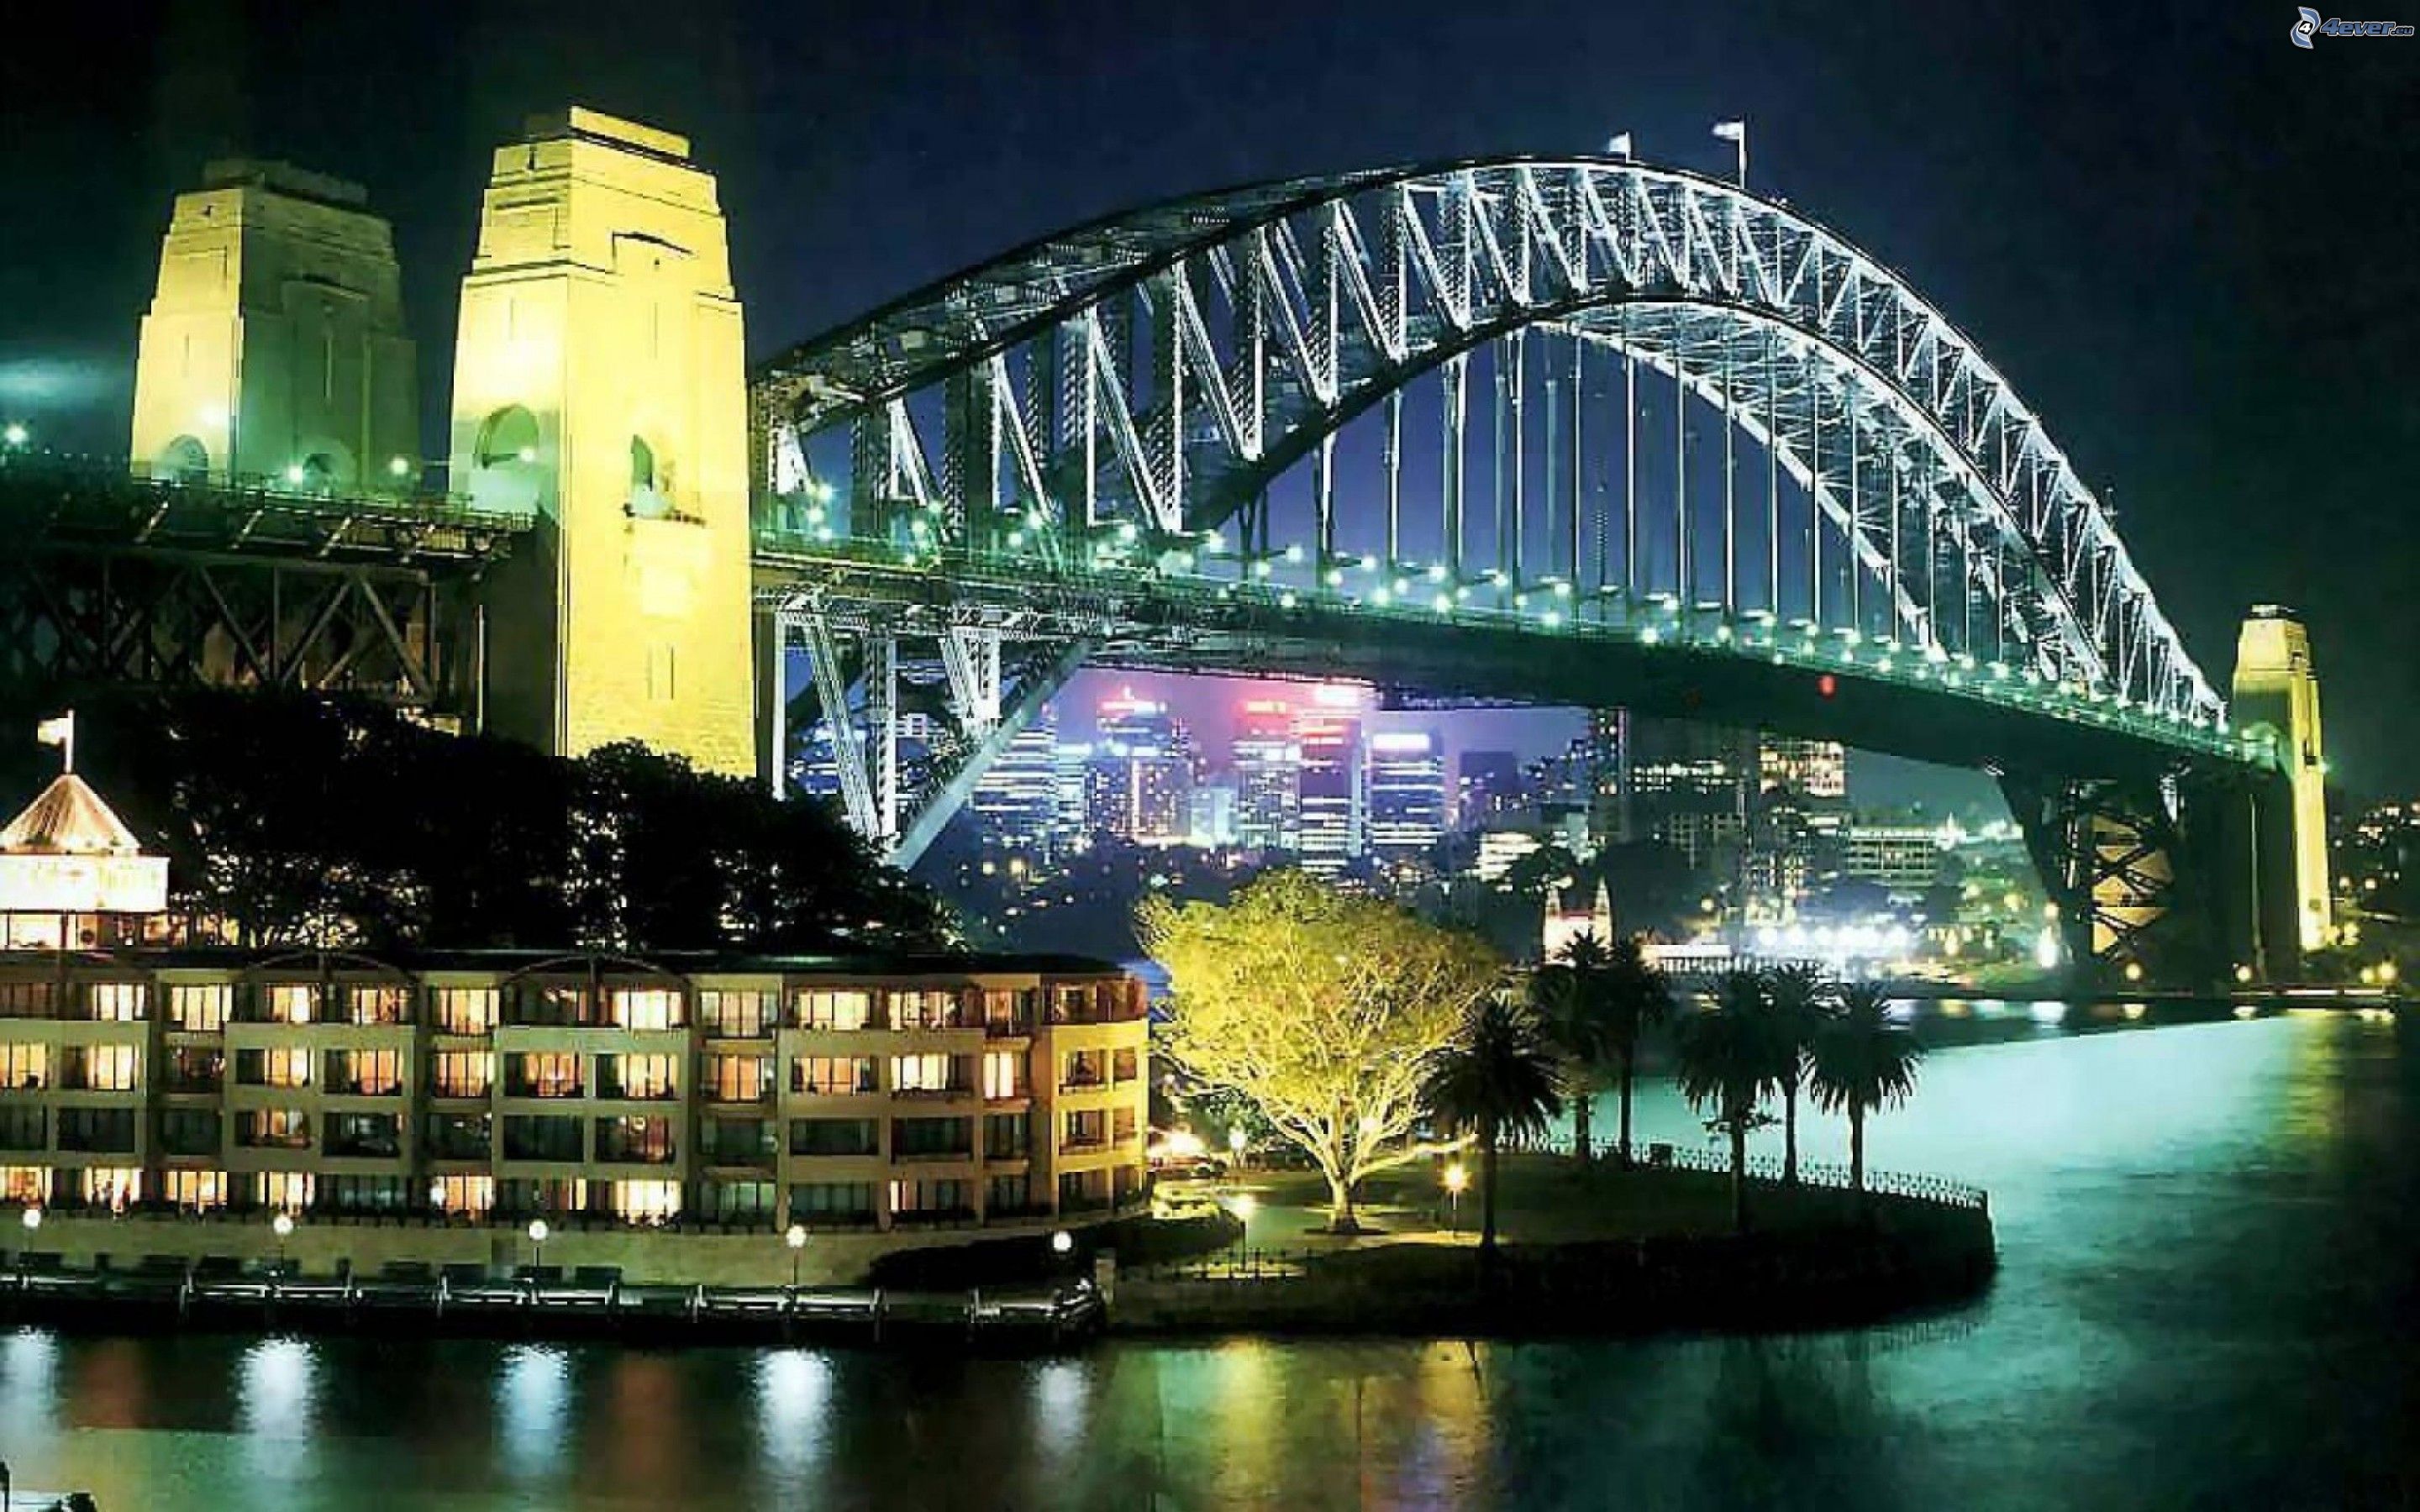 Мост Харбор бридж в Австралии с названием